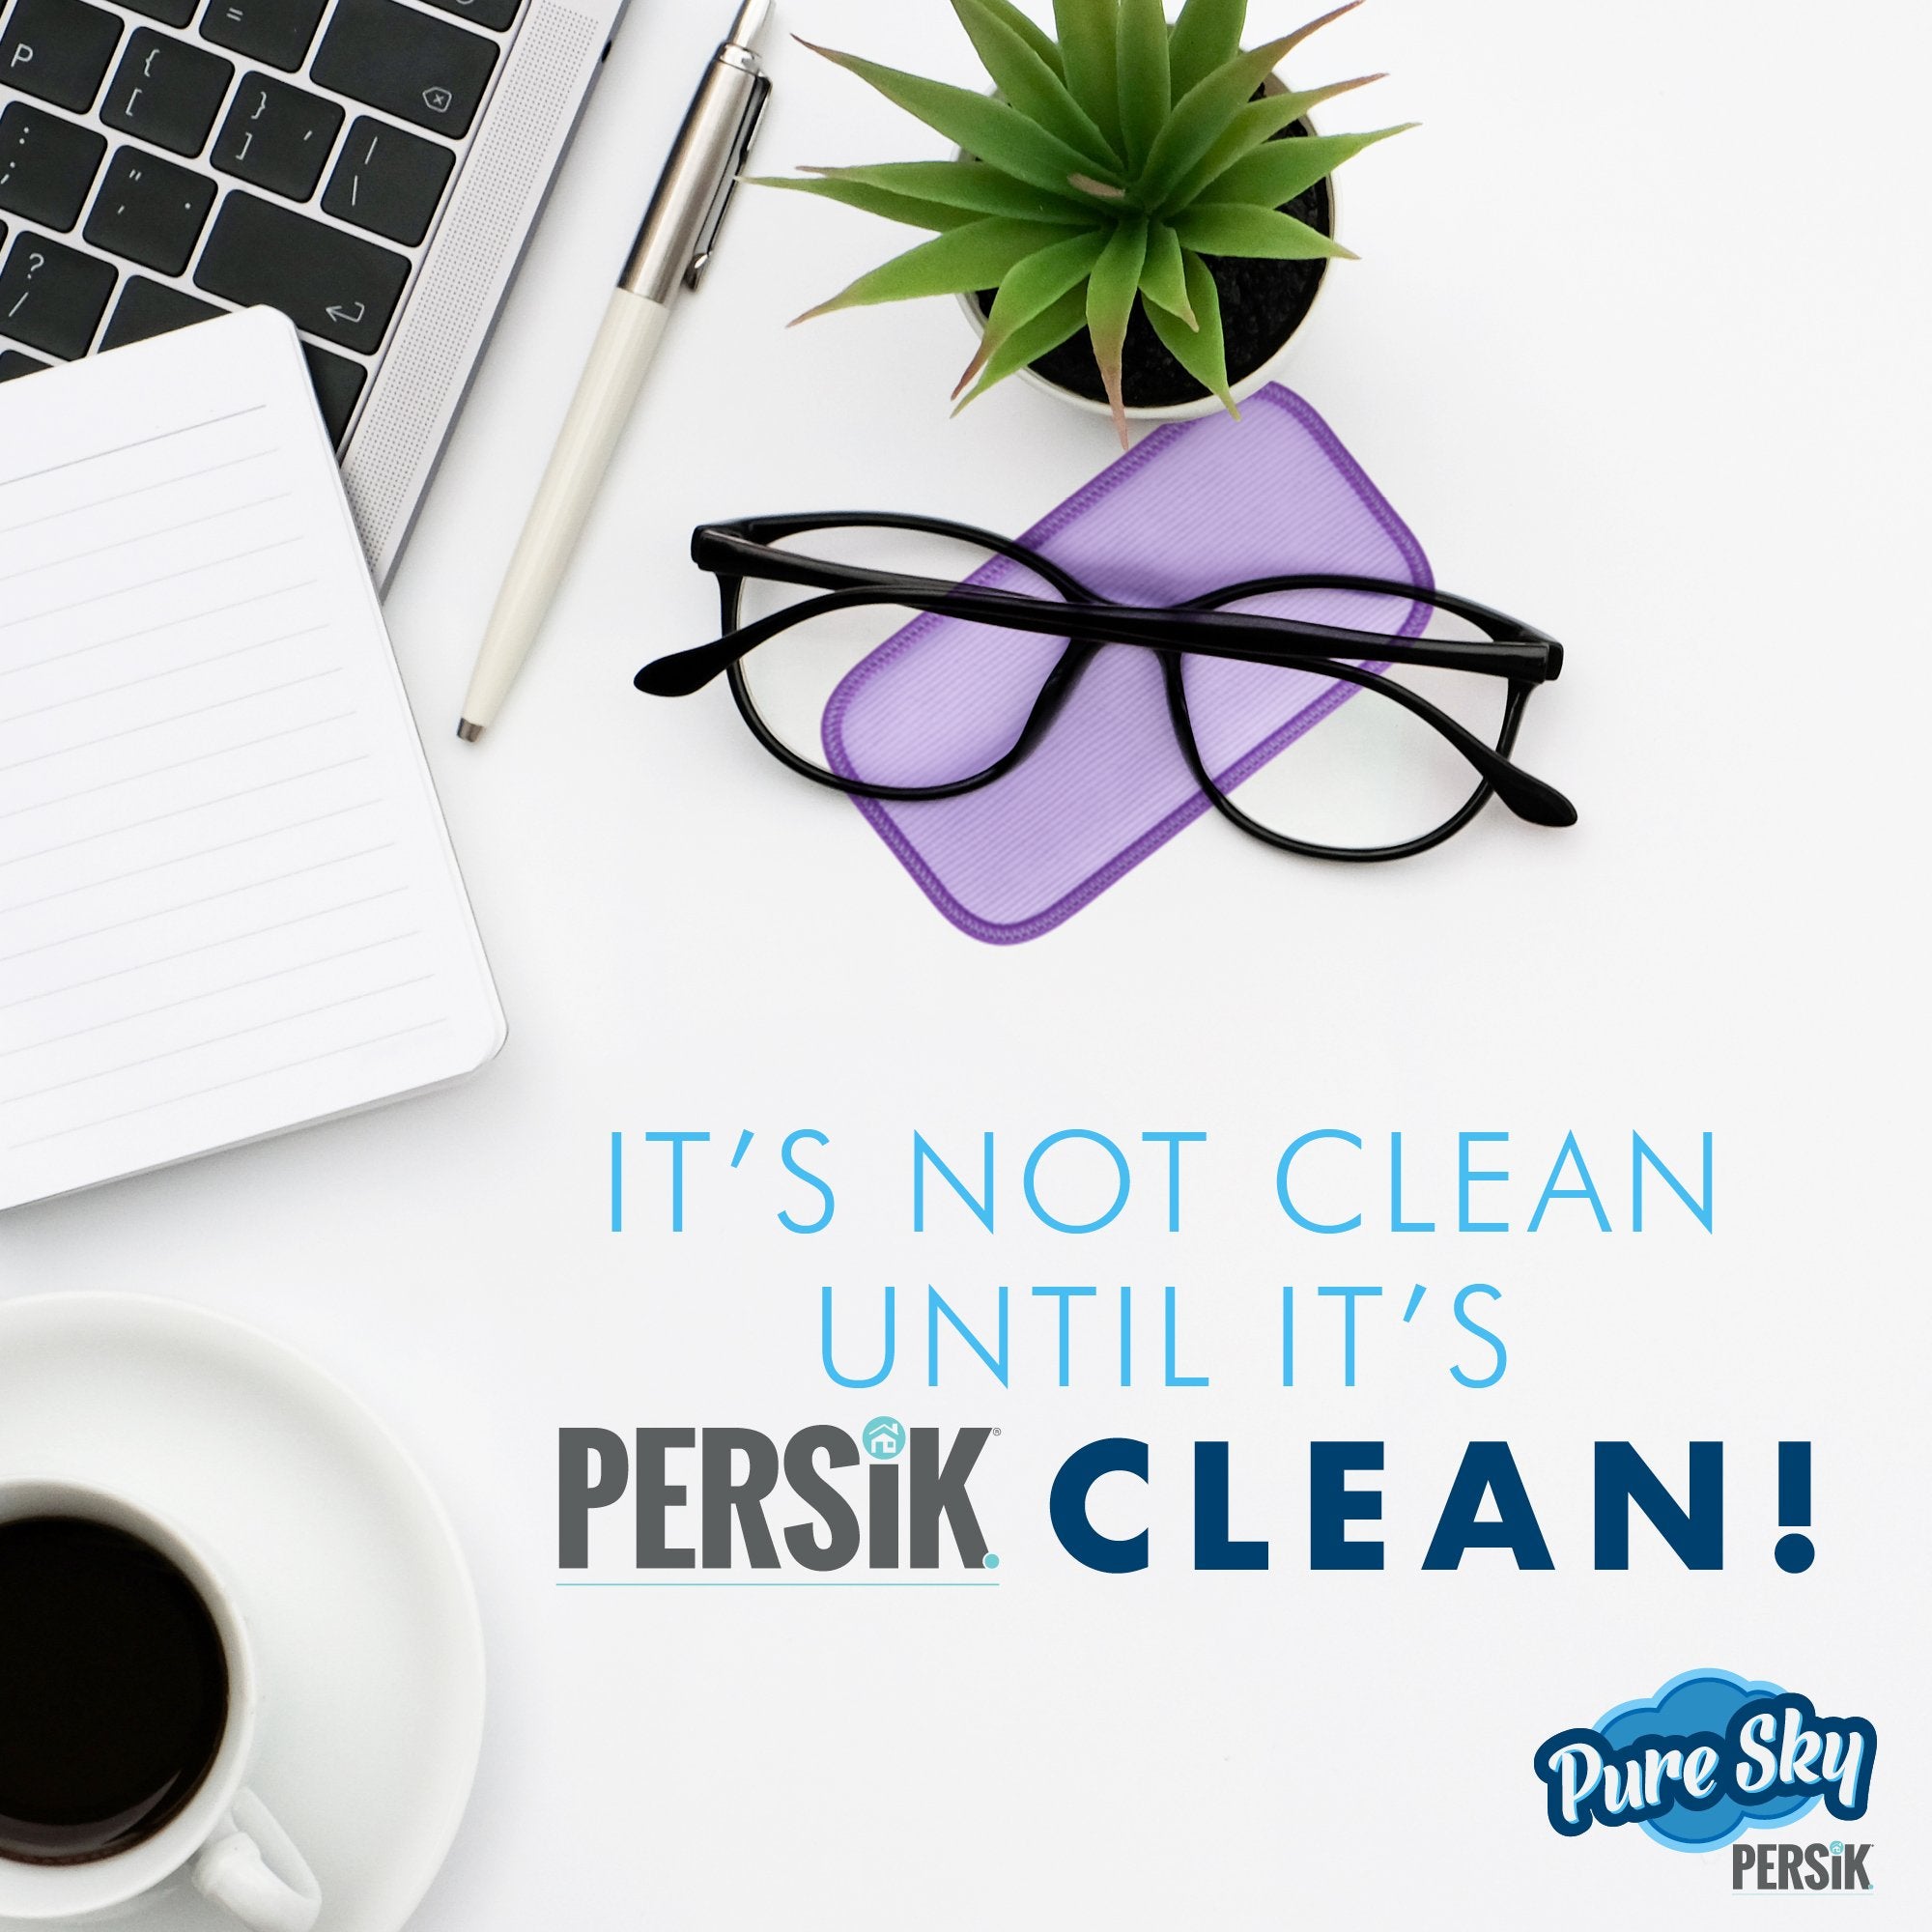 Persik Pure-sky Eyeglass Cleaner Cloth – Streak Free Ultra Microfiber Eyeglass Cleaner Wipes - Leaves No Wiping Marks - [3 Pack] - Cleans Lenses